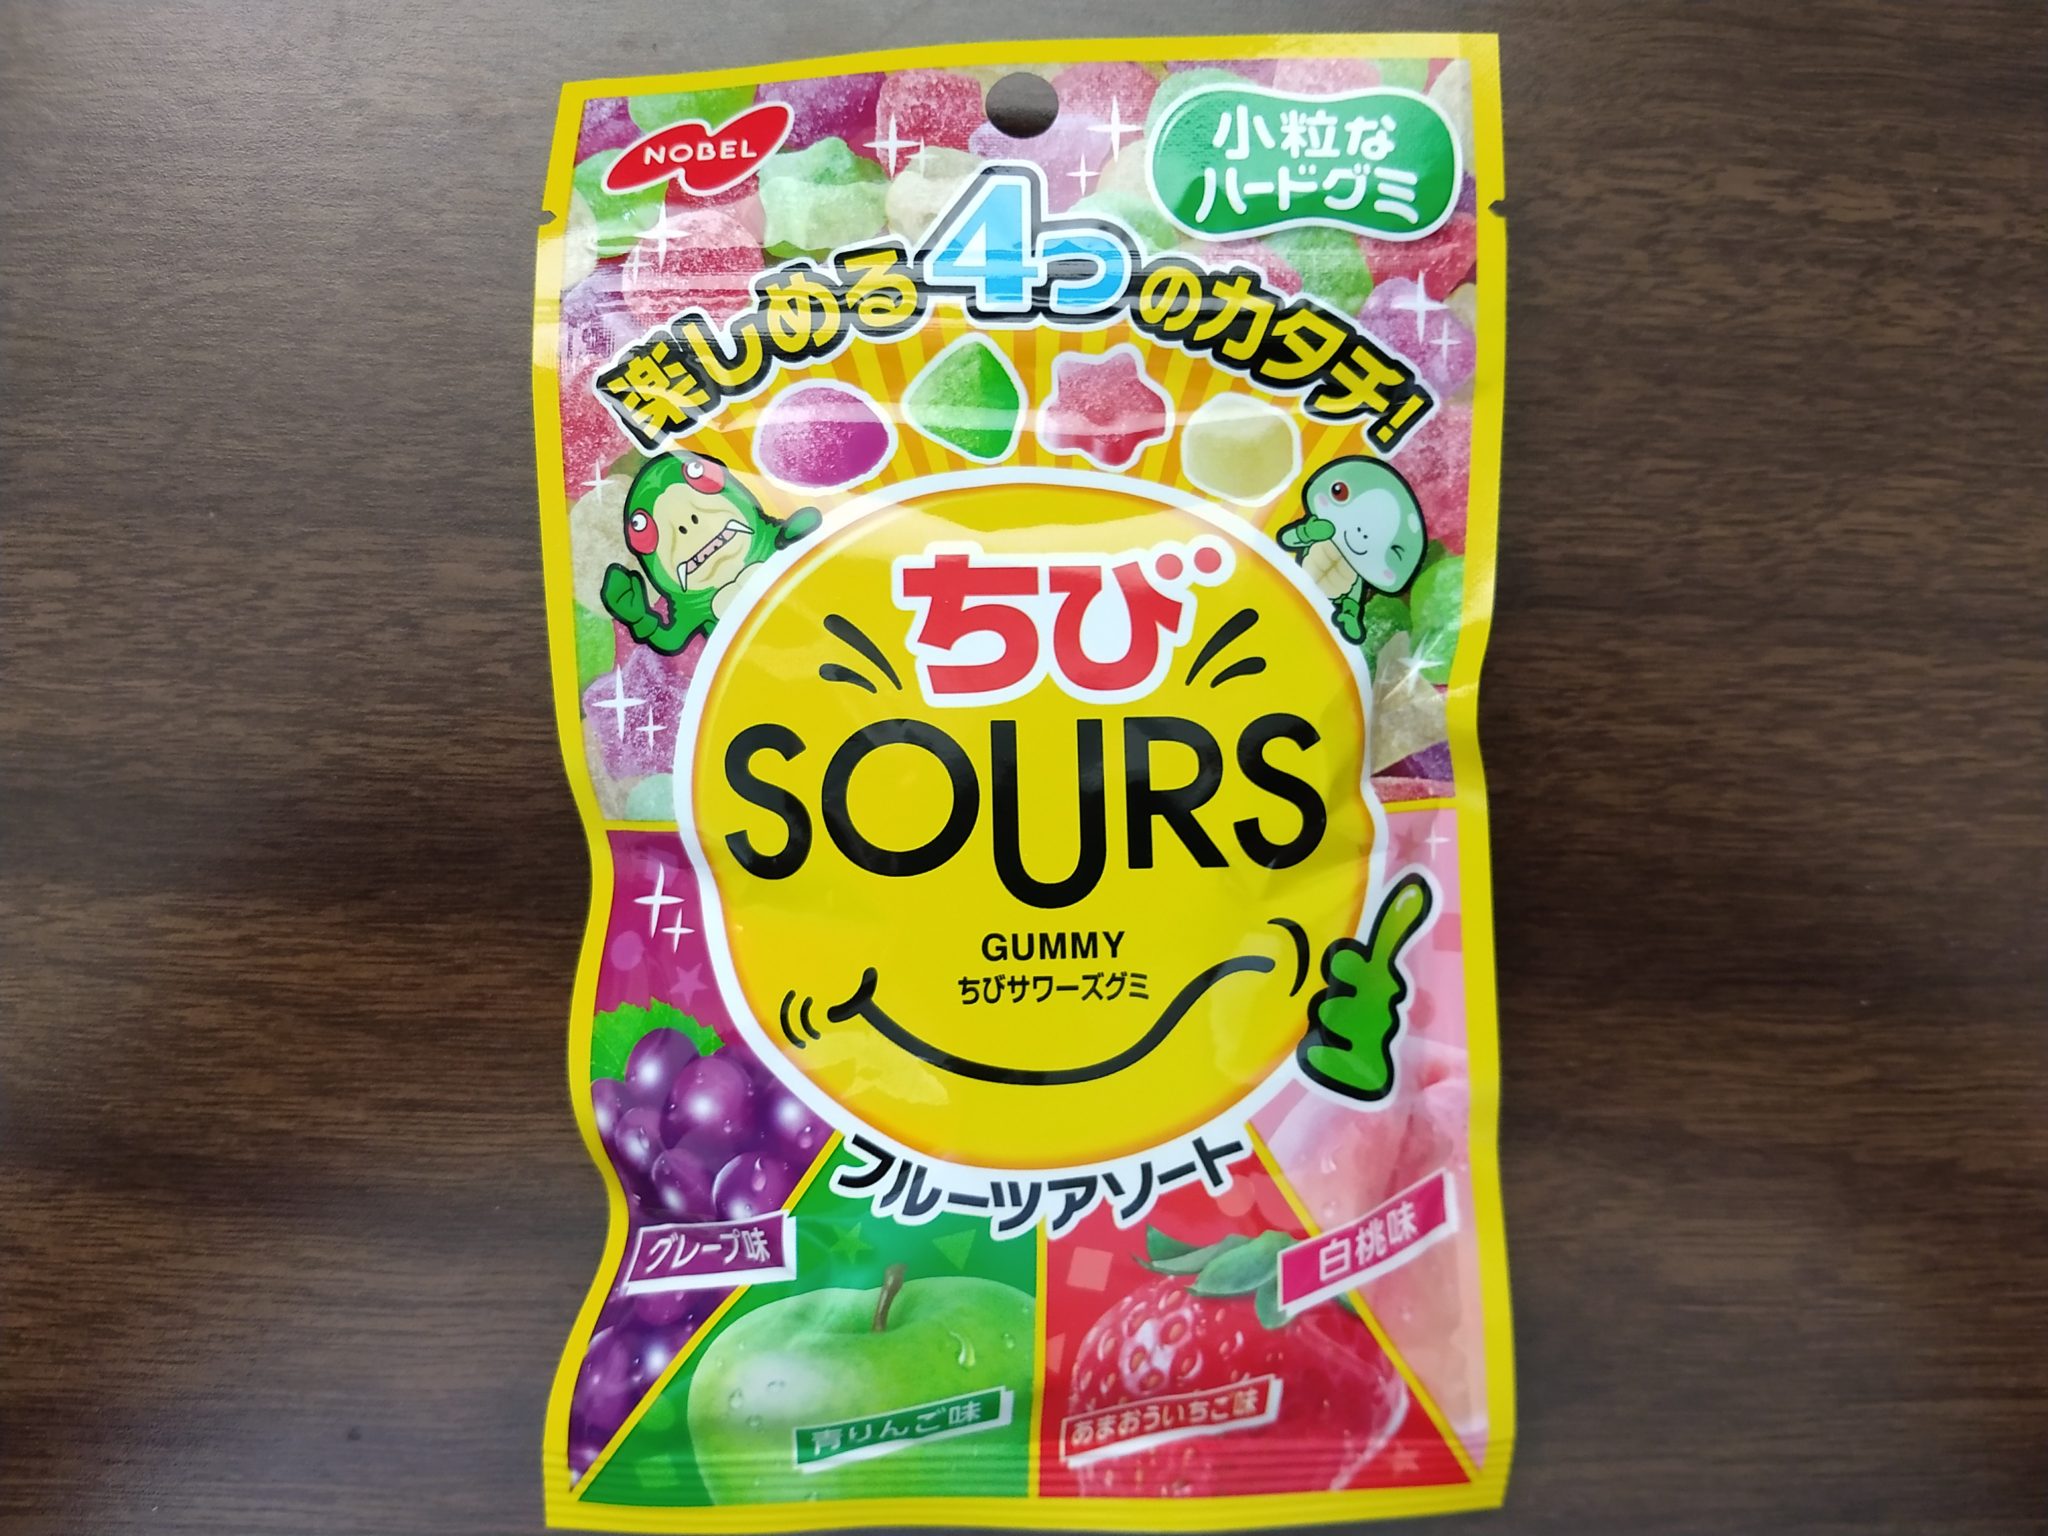 Nobel Sours Gummy Candy – Fruit Mix